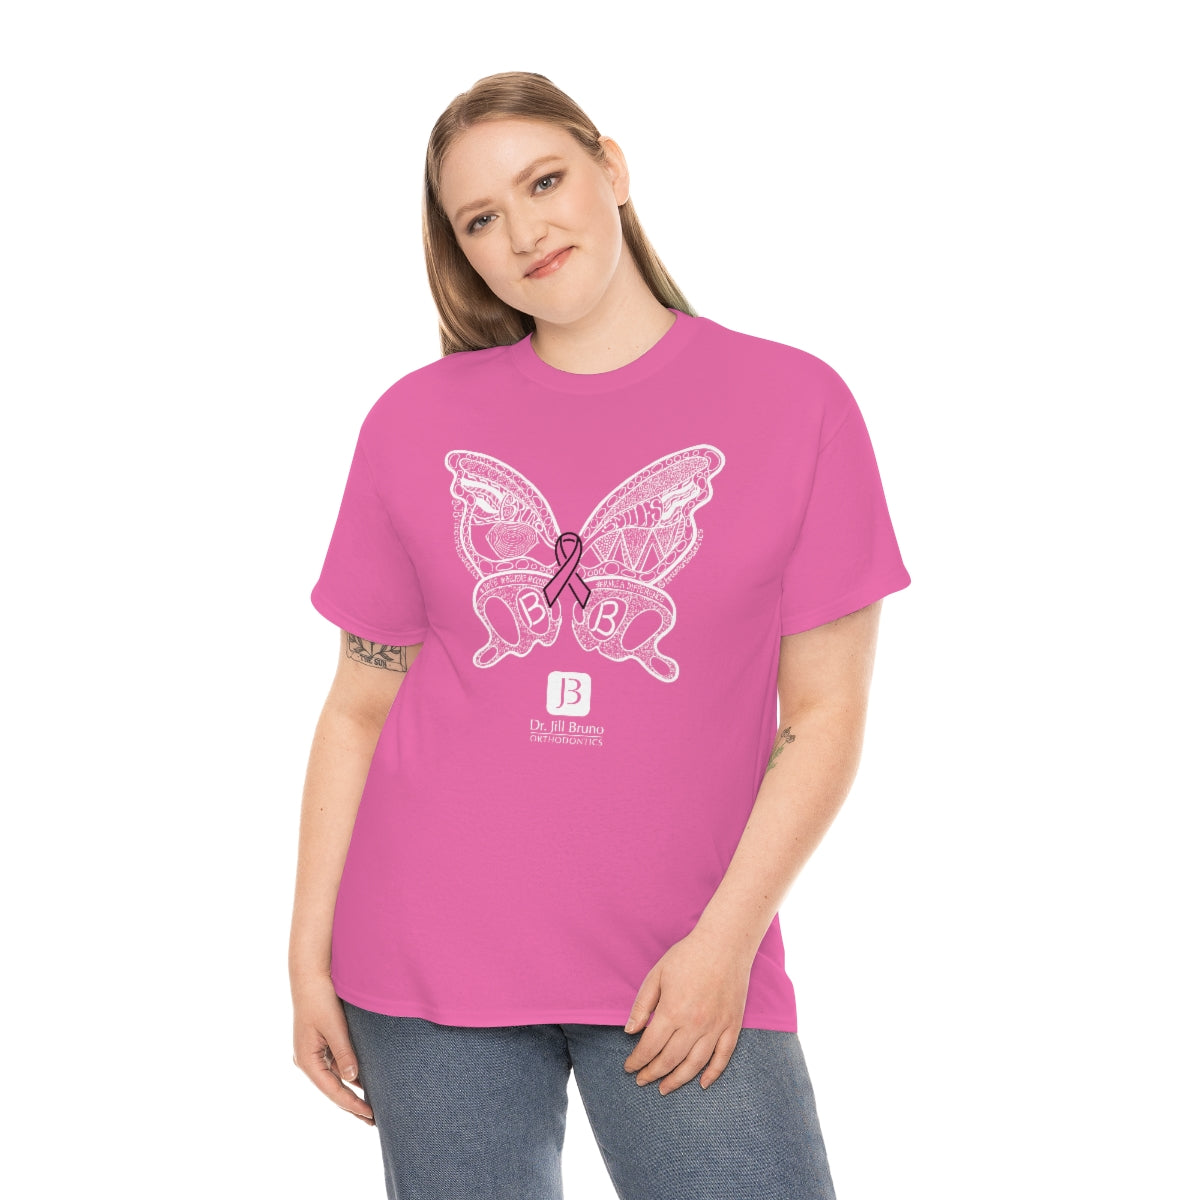 Breast Cancer Awareness Butterflies for Change T-Shirt